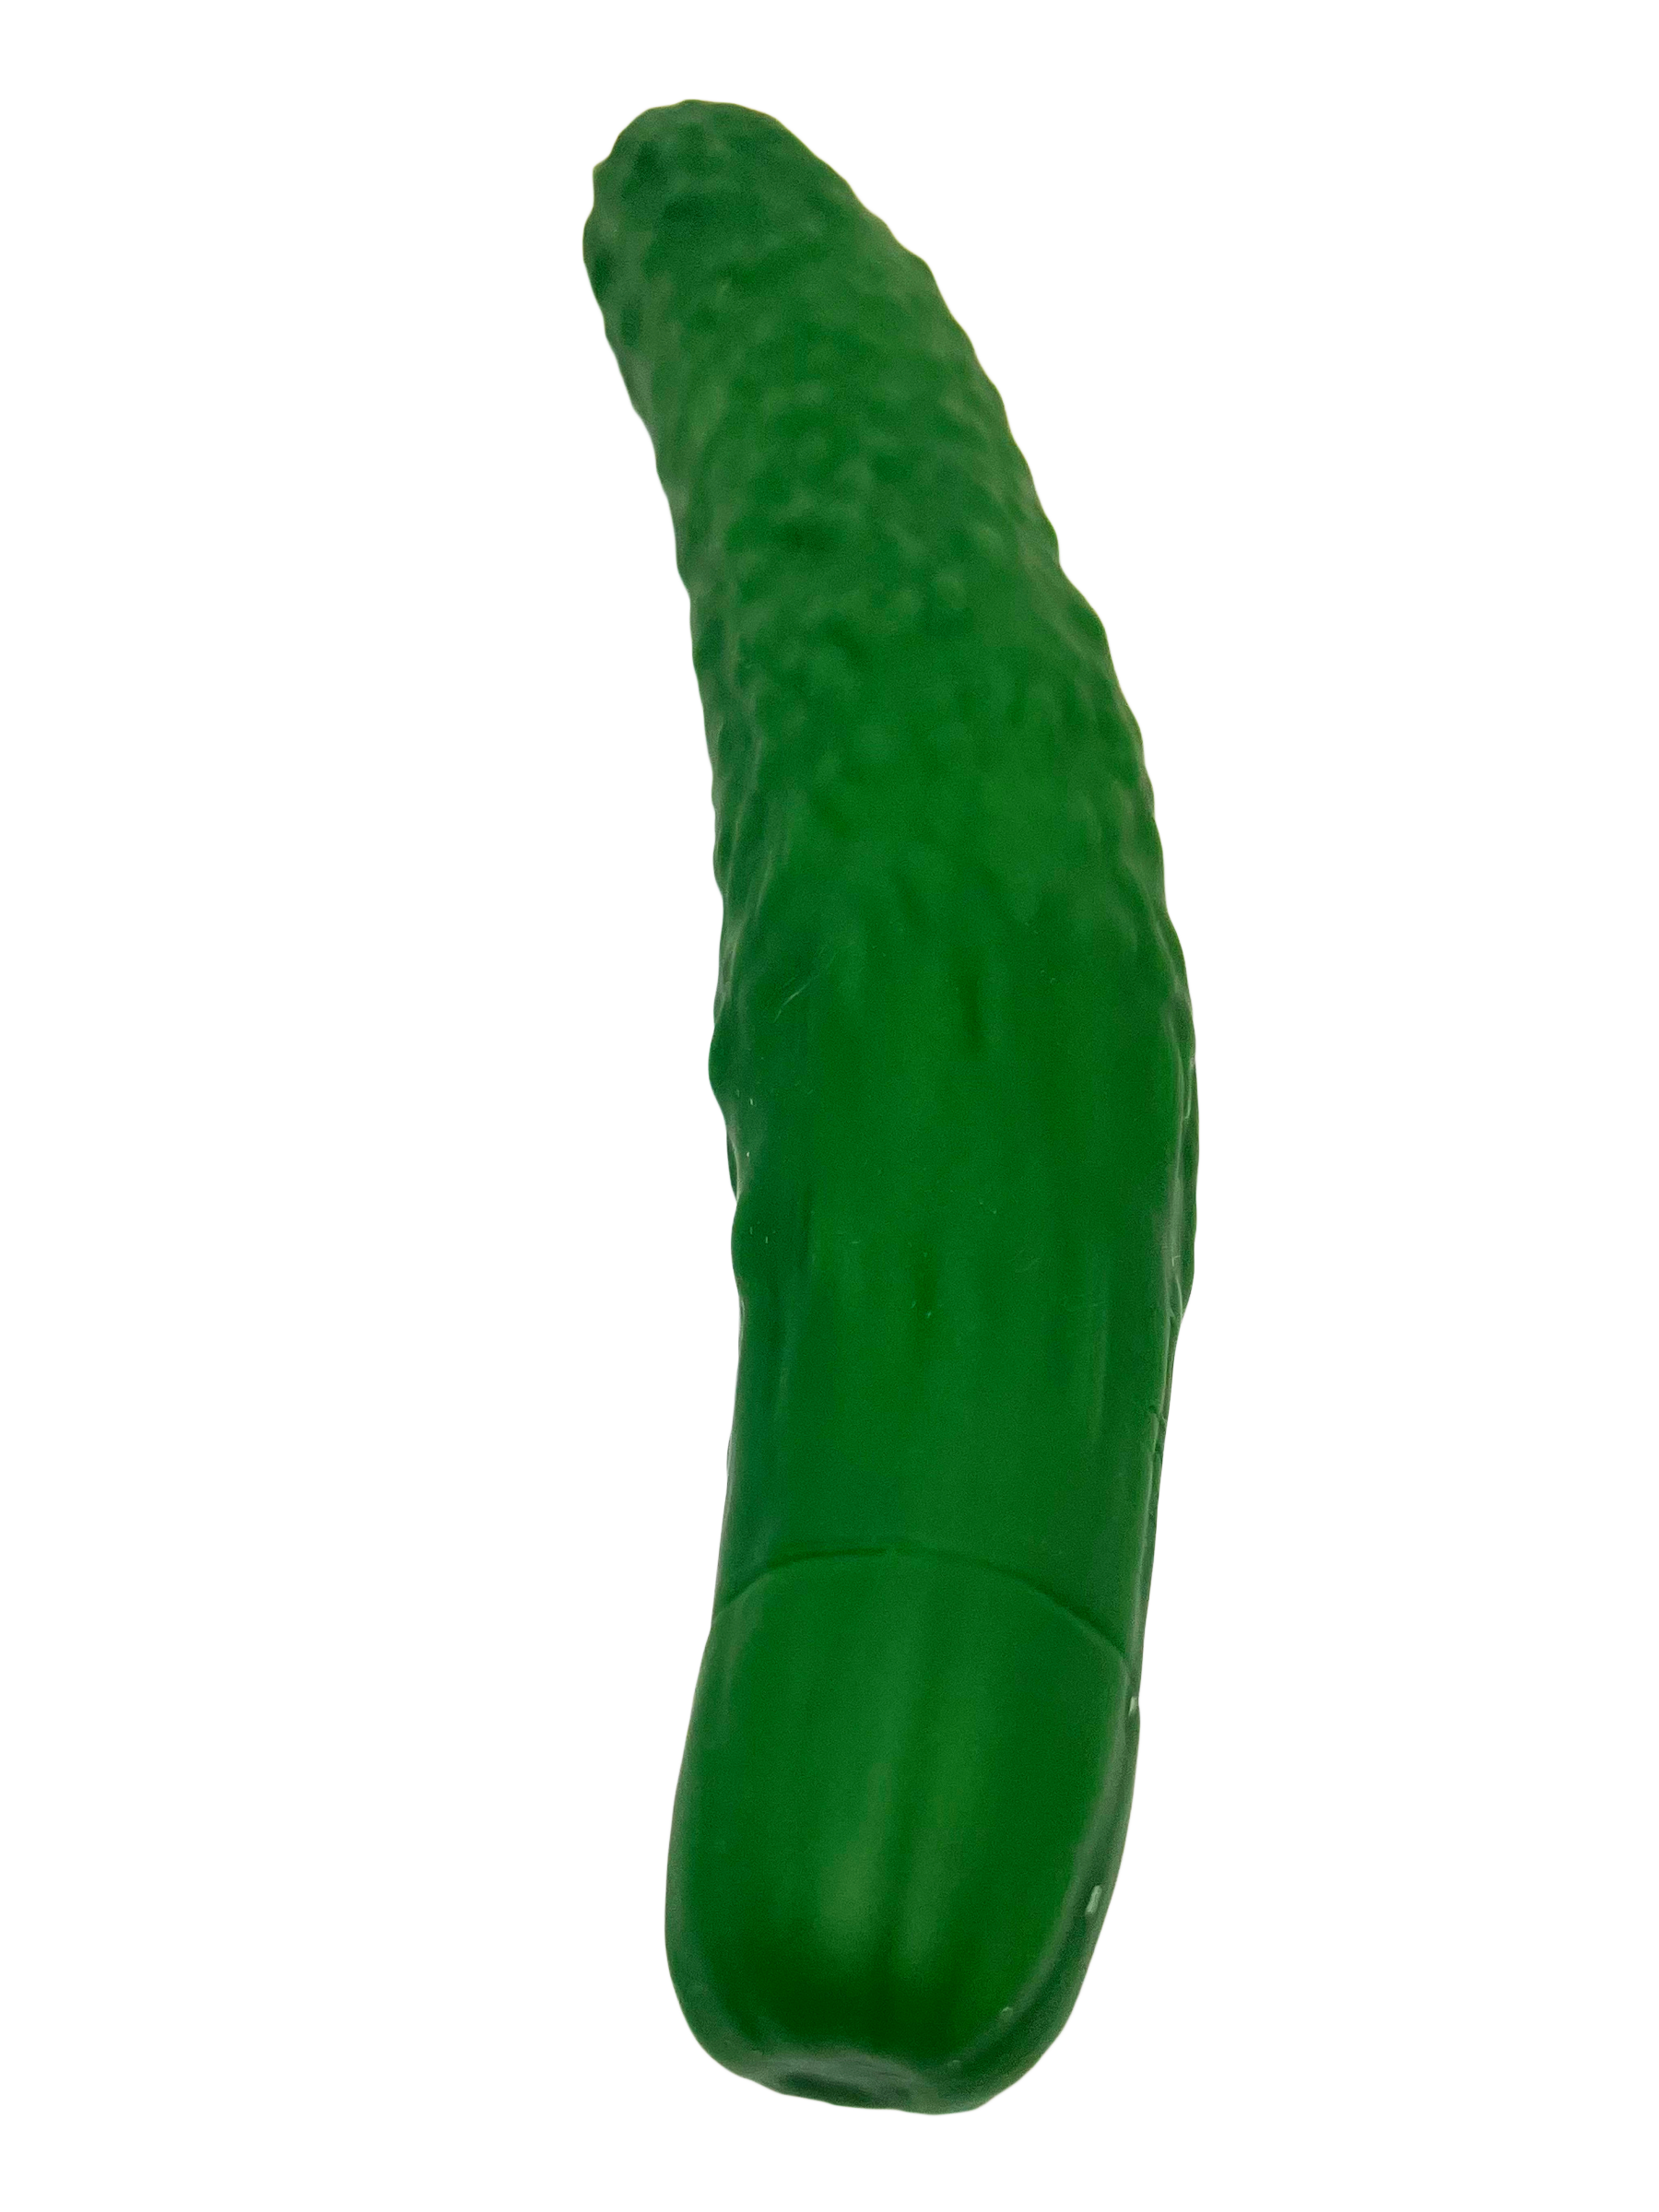 Vegetable Vibes Cucumber Vibrator